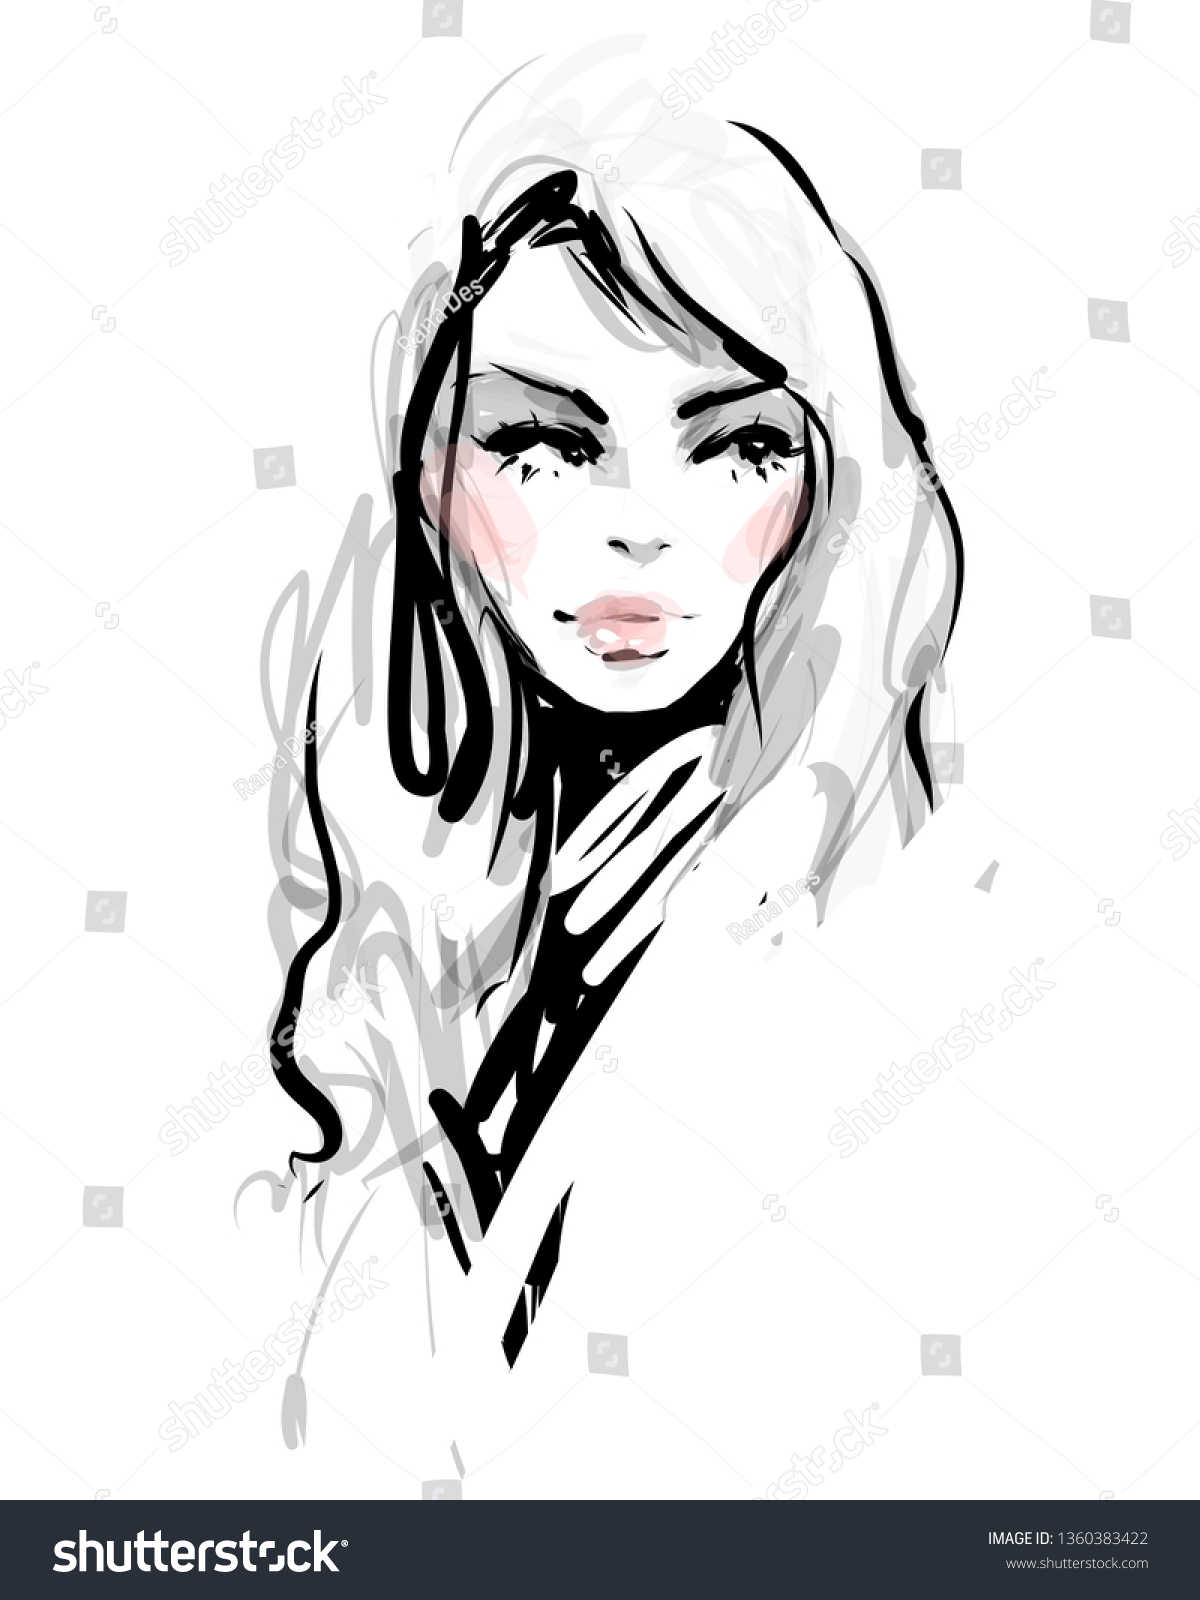 Beautiful Girl Hand Drawn Fashion Illustration Stock Vector Royalty Free 1360383422 Shutterstock 6568